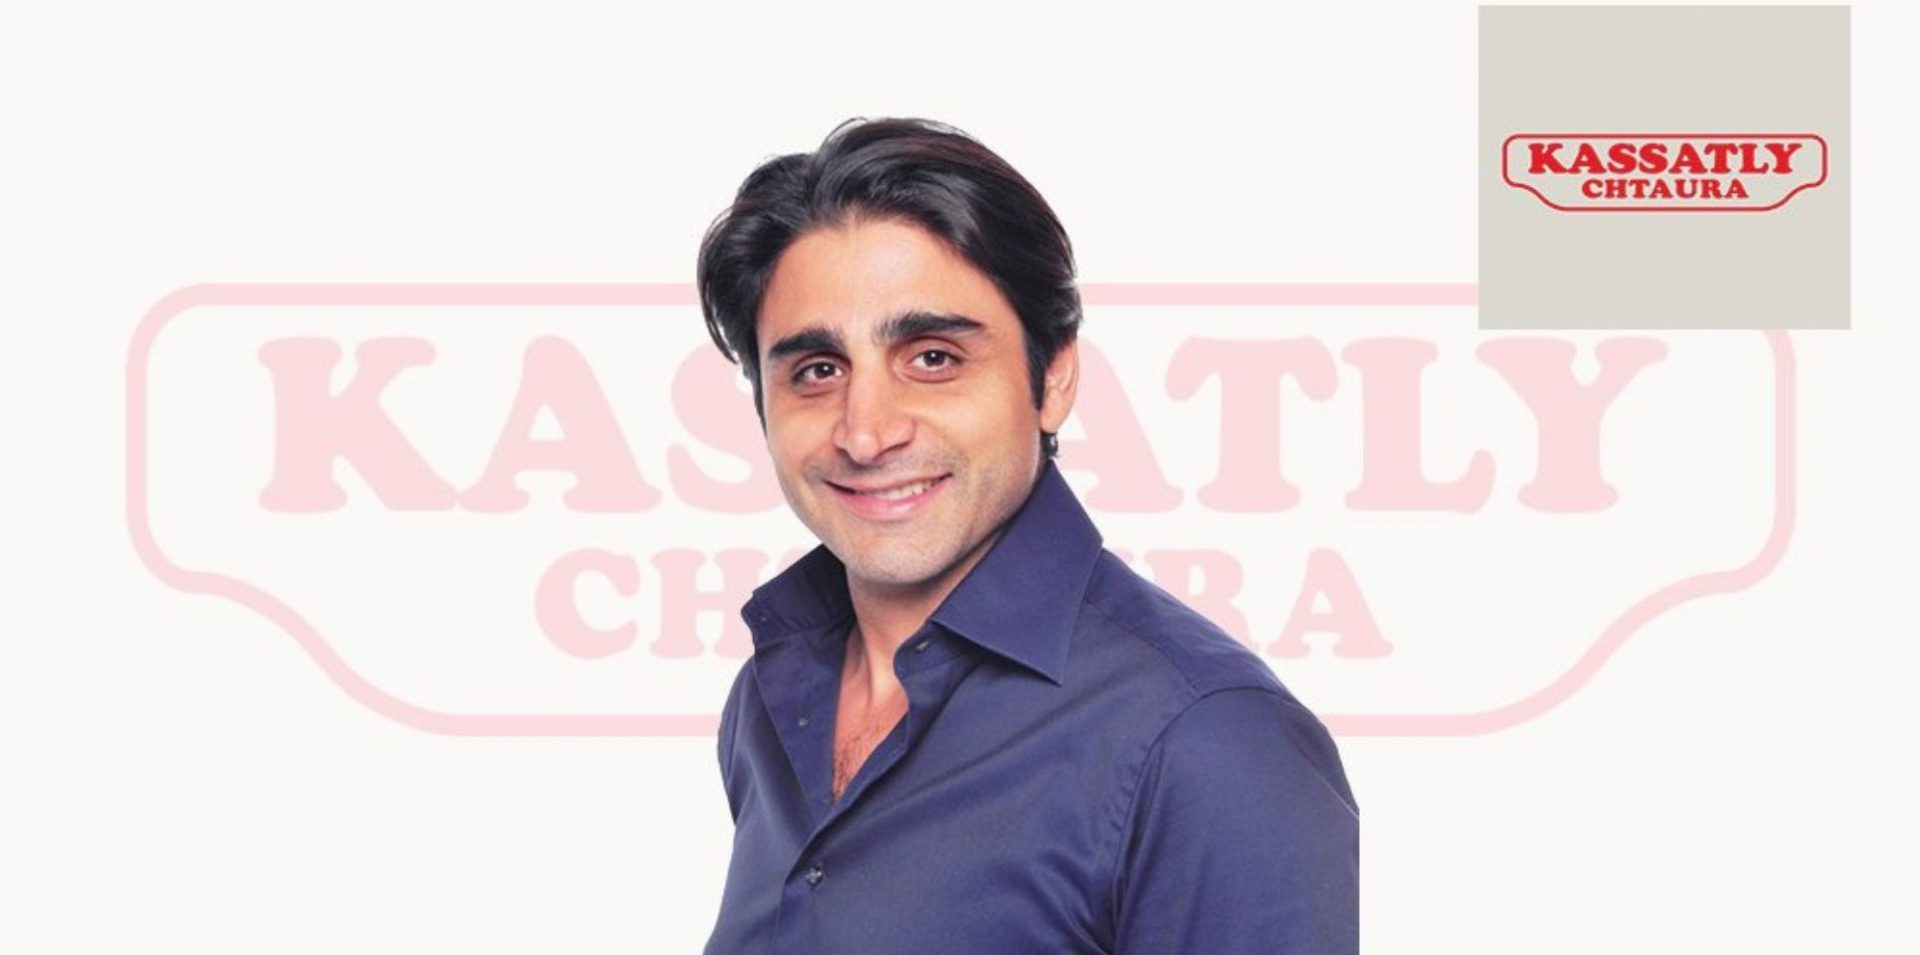 Nayef Kassatly, Managing Director of Kassatly Chtaura